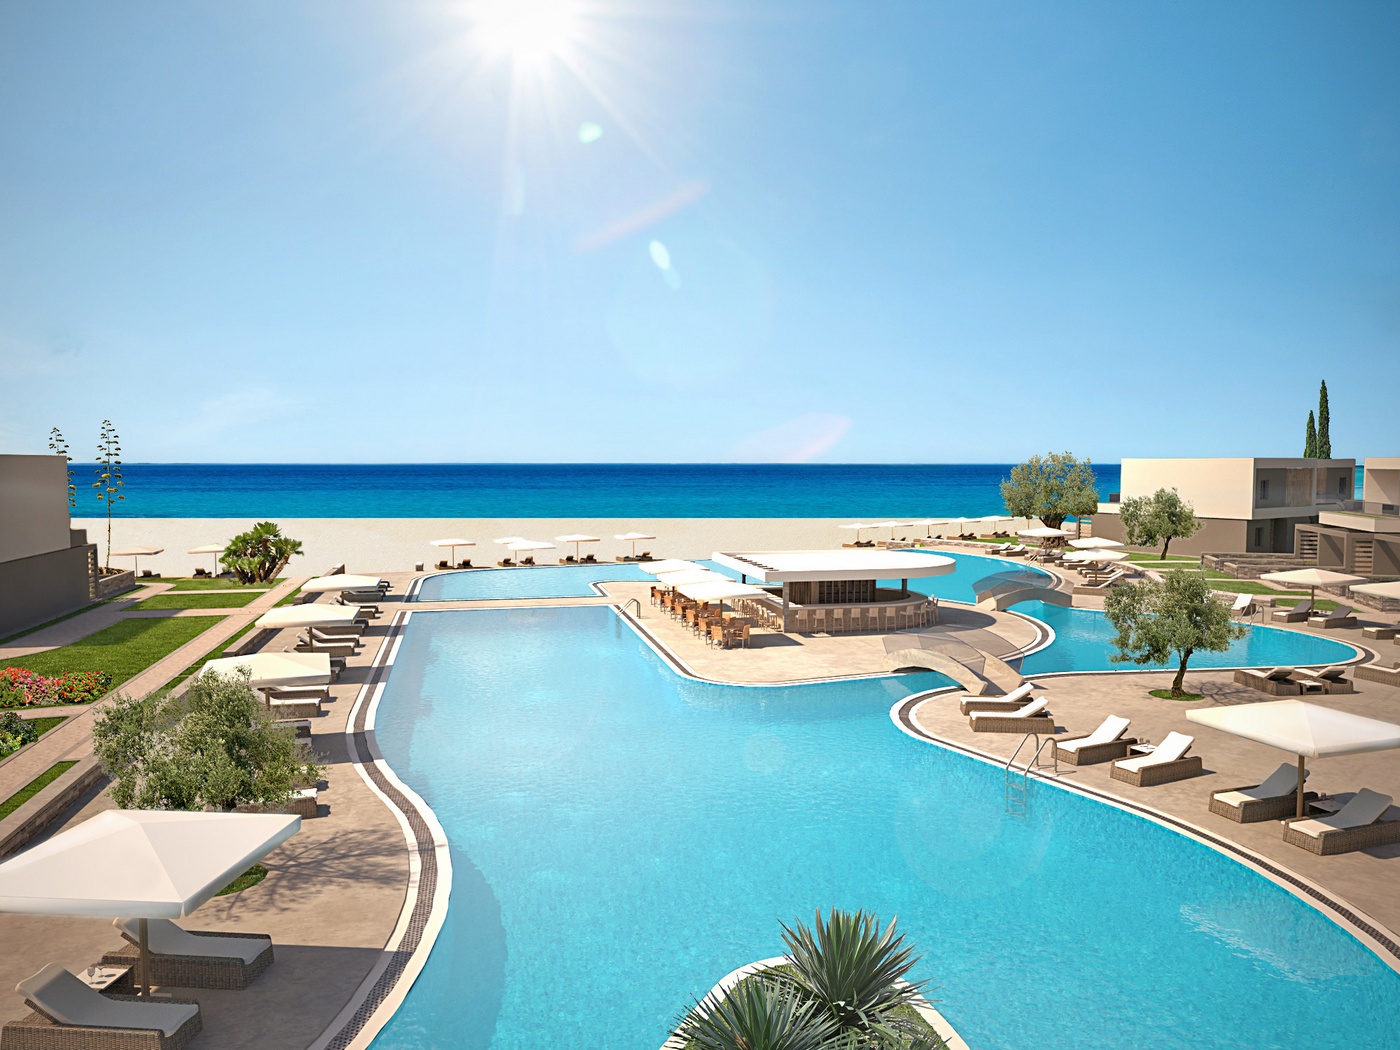 Top 21 new Luxury Beach Resorts opening in 2017